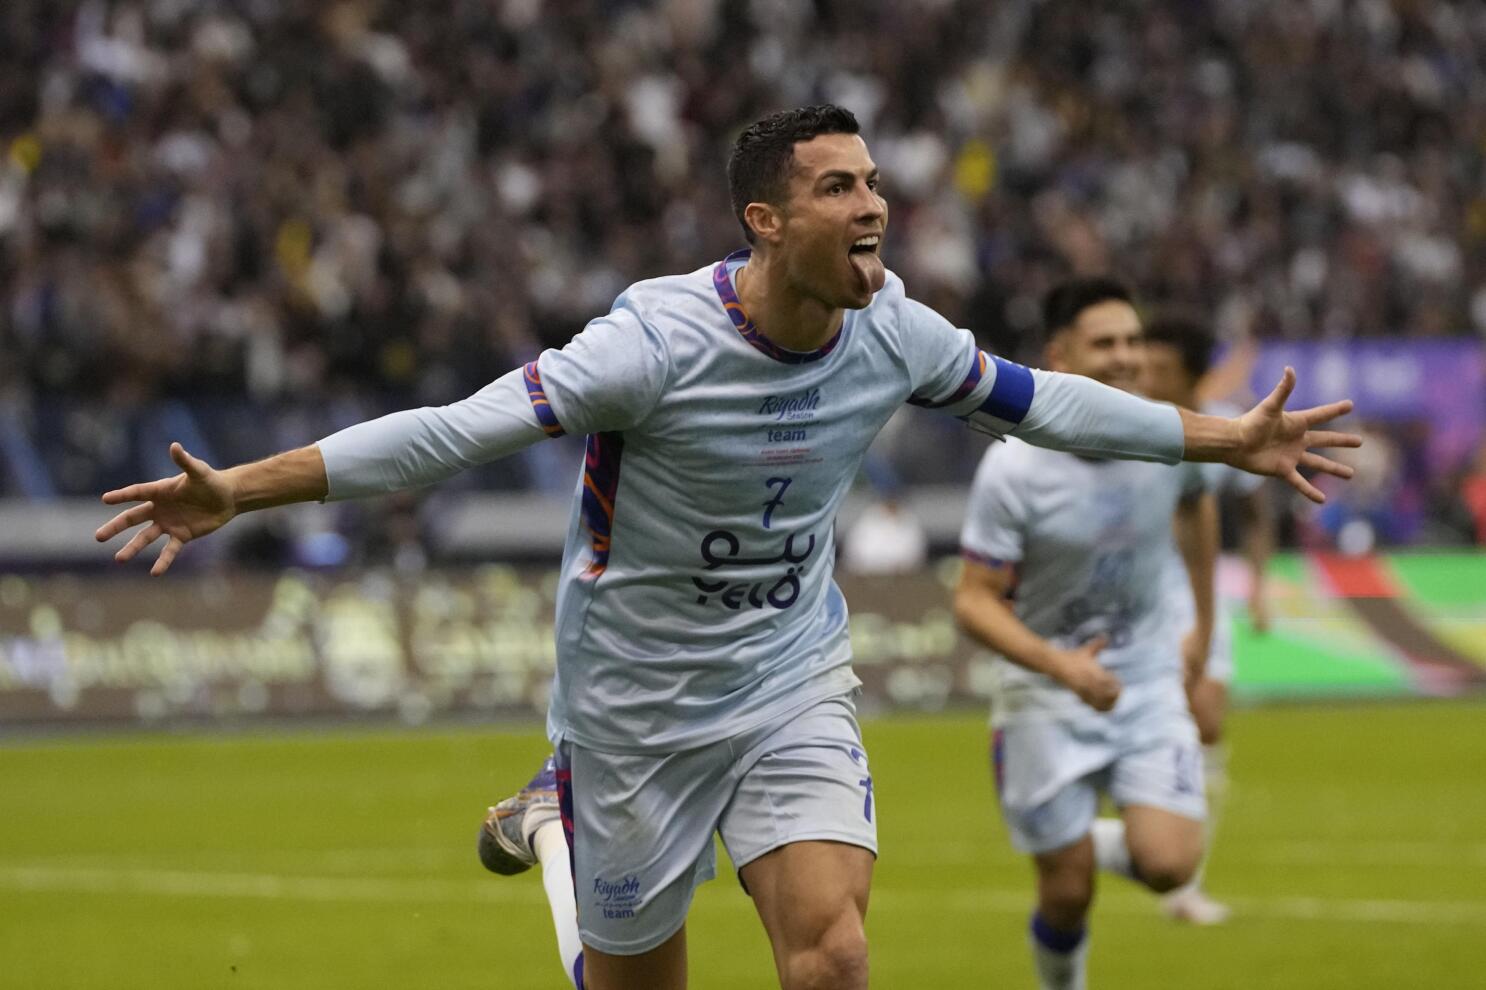 Cristiano Ronaldo scores 4 goals in Saudi Pro League game